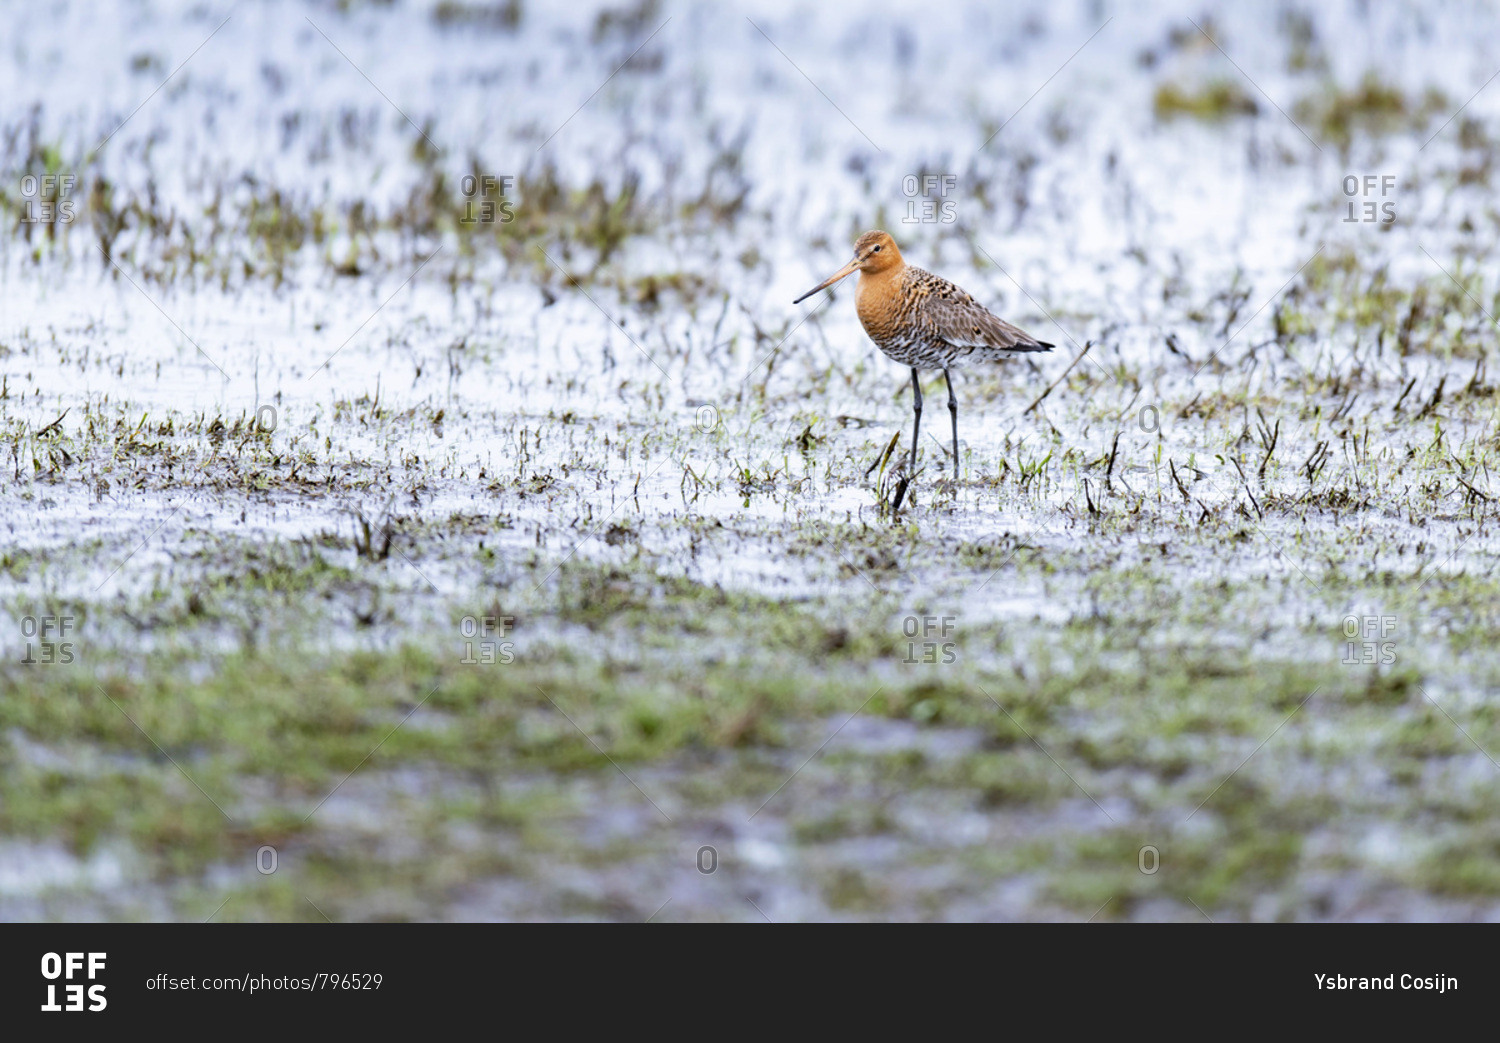 Red knot bird walking in a muddy field